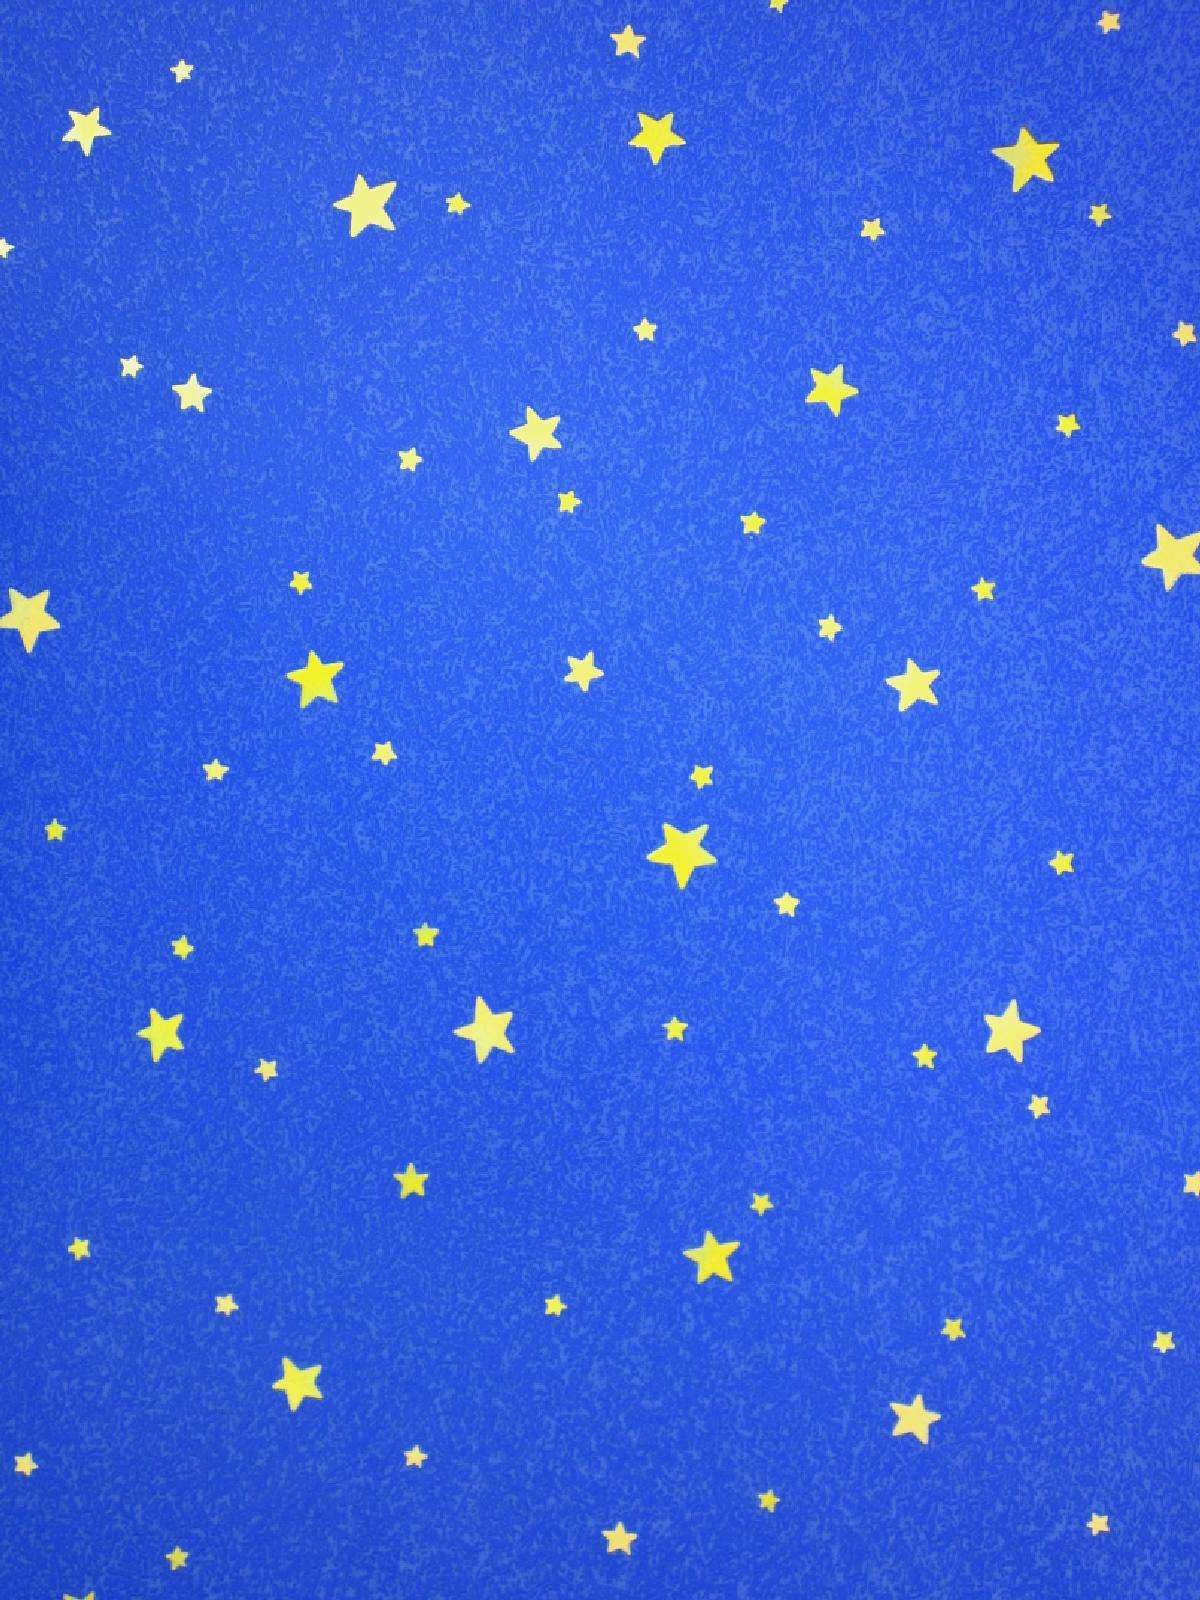 Blue wallpaper with yellow stars (ebay). Blue star wallpaper, Star wallpaper, Blue wallpaper